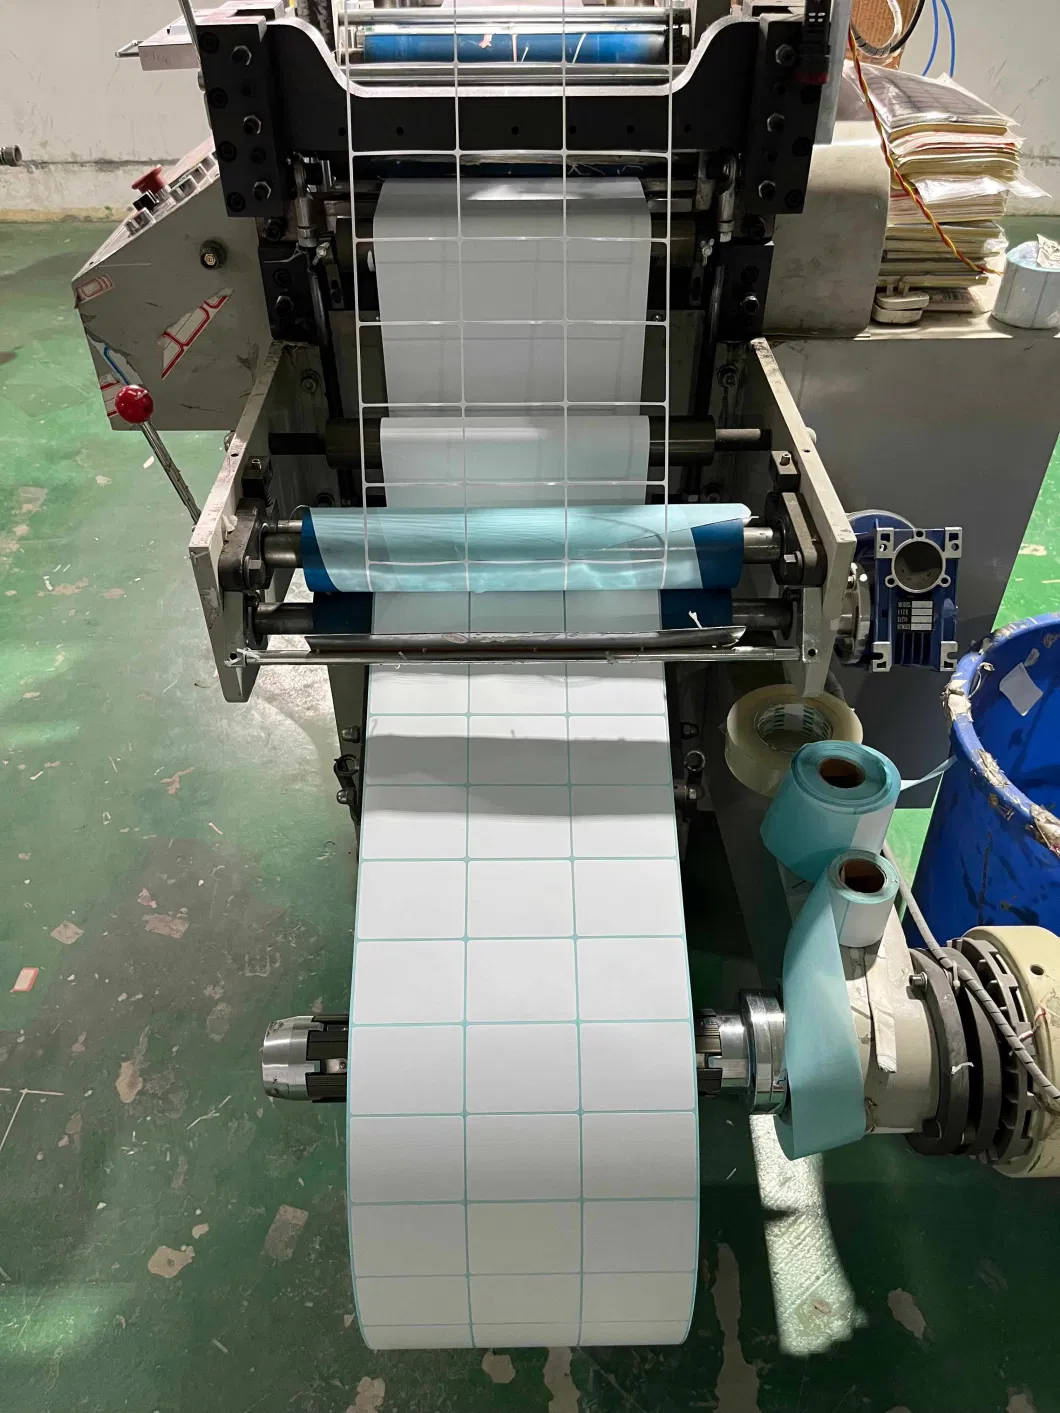 Quick Customization Offset Printing Inkjet Large Amount Shipping Package Custom Logo Stickers Self-Adhesive Label